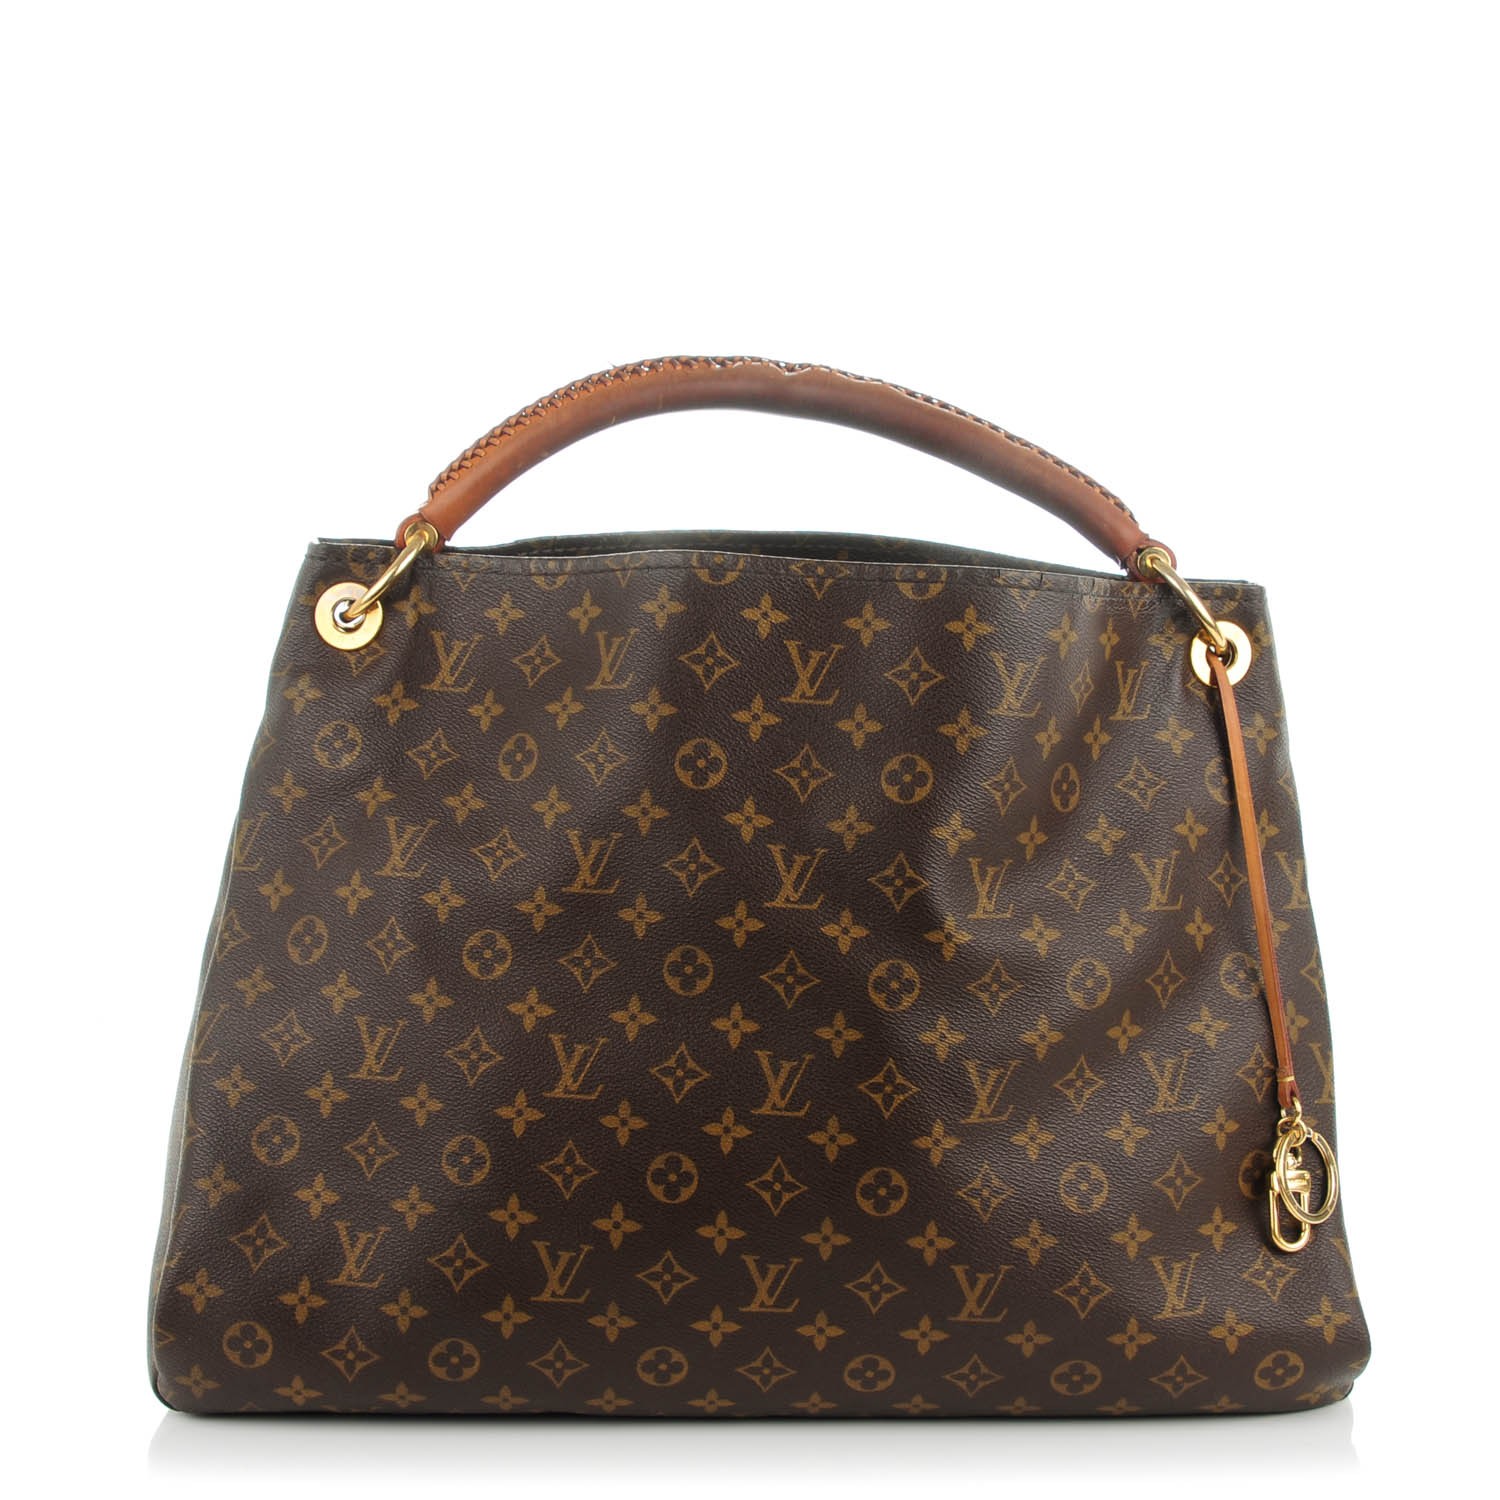 Louis Vuitton GM (large) Artsy Hobo bag